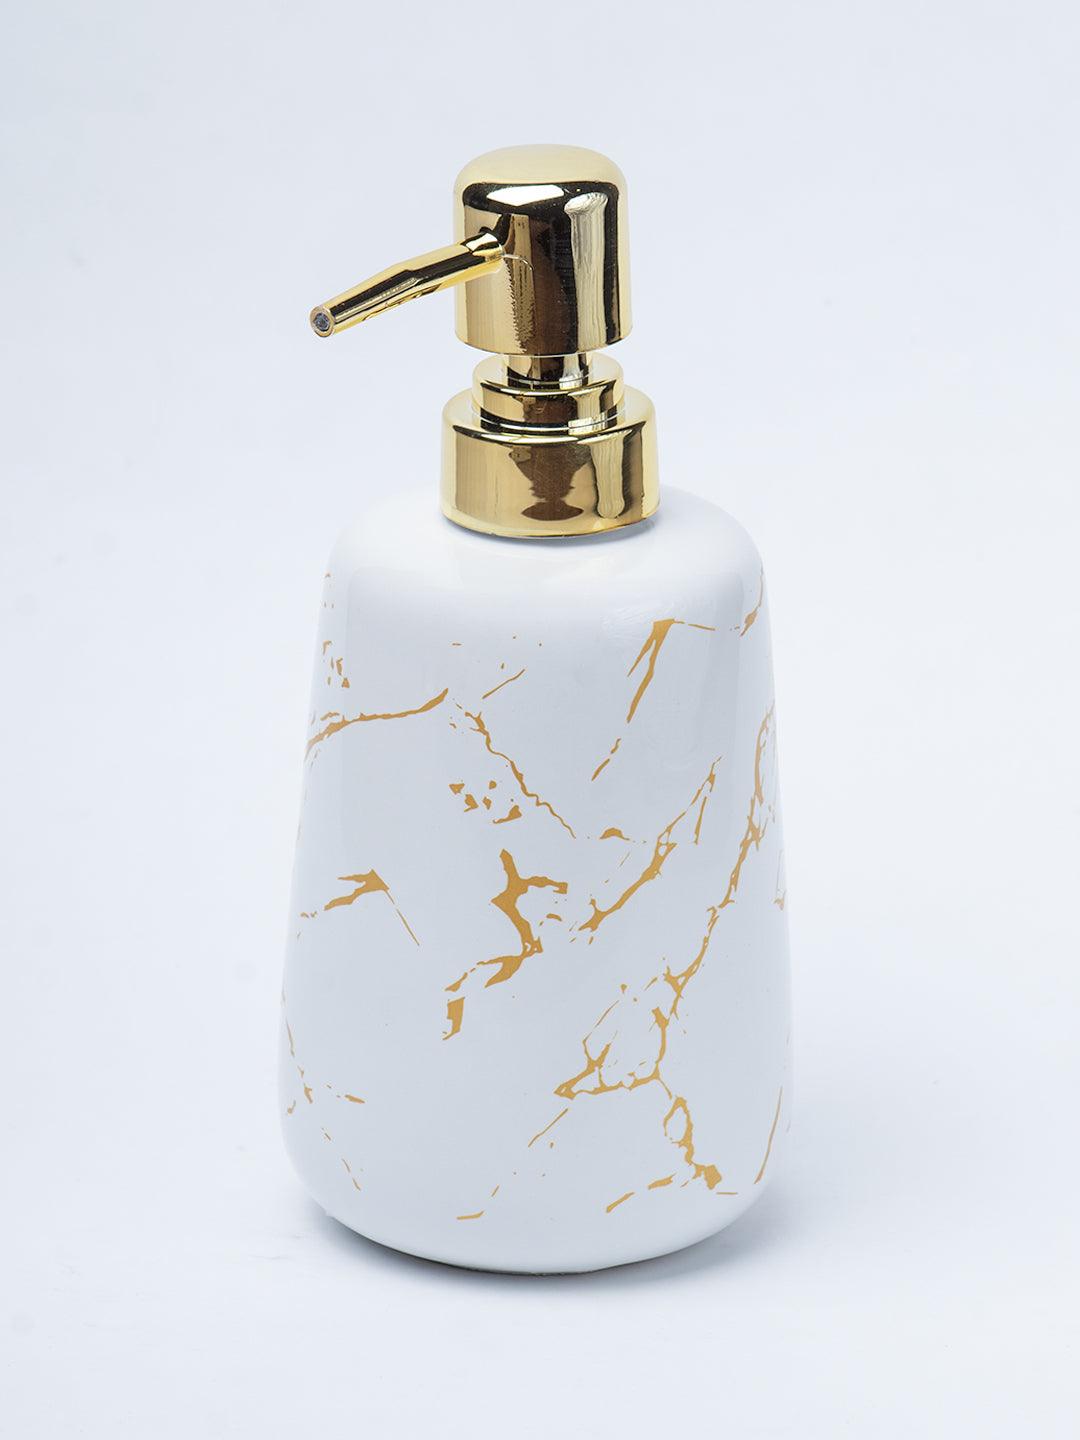 Off White Ceramic Liquid Soap Dispenser - Stone Finish, Bath Accessories